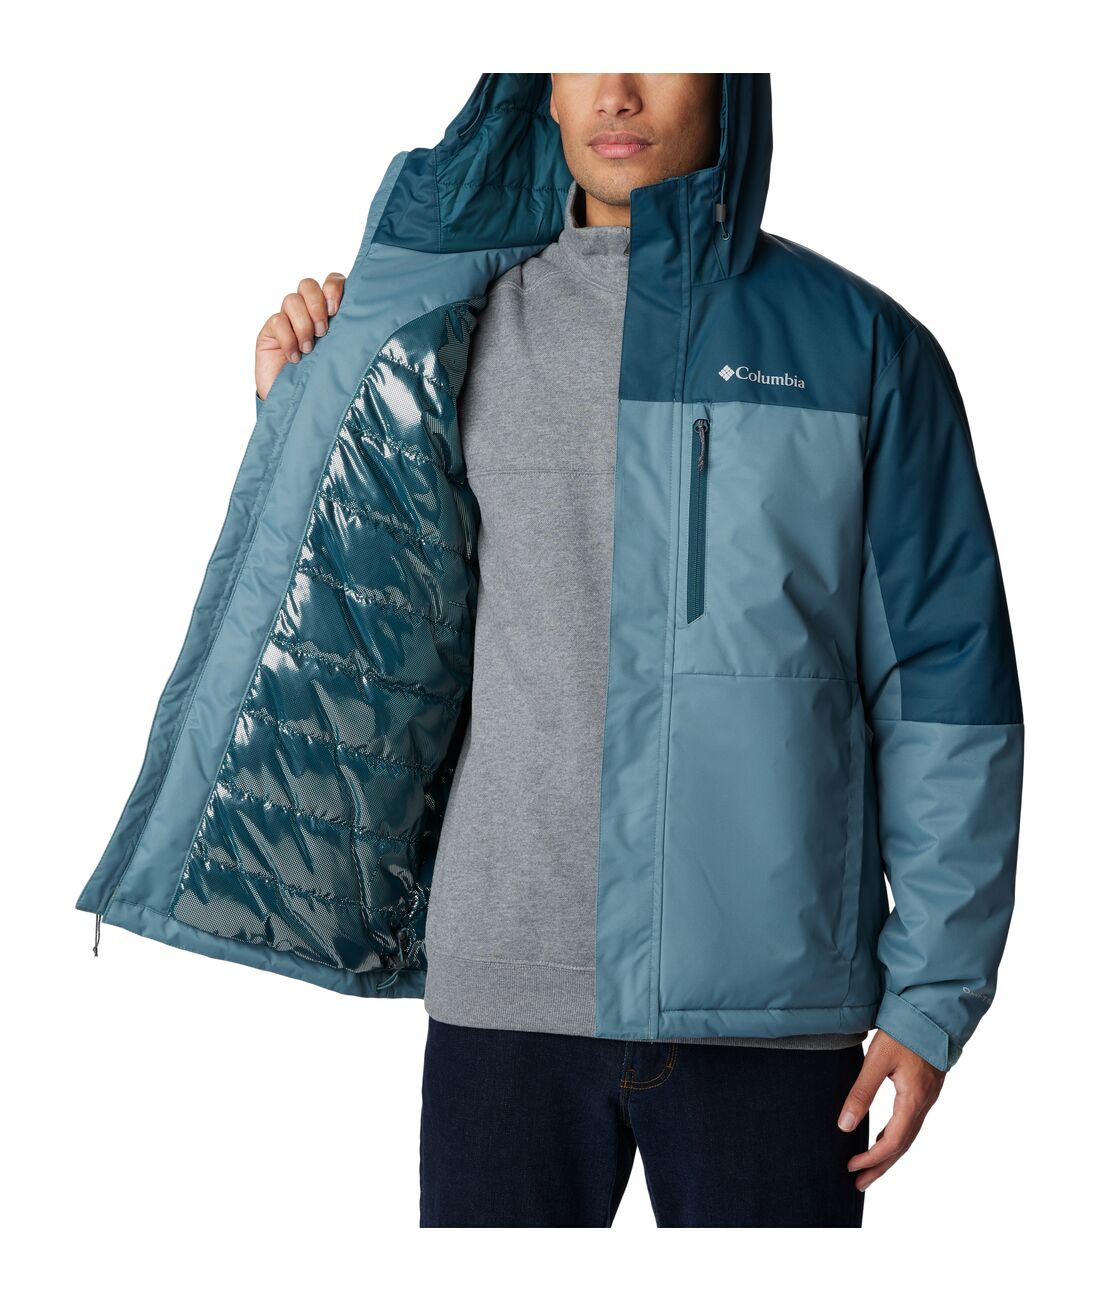 Hikebound Insulated Jacket